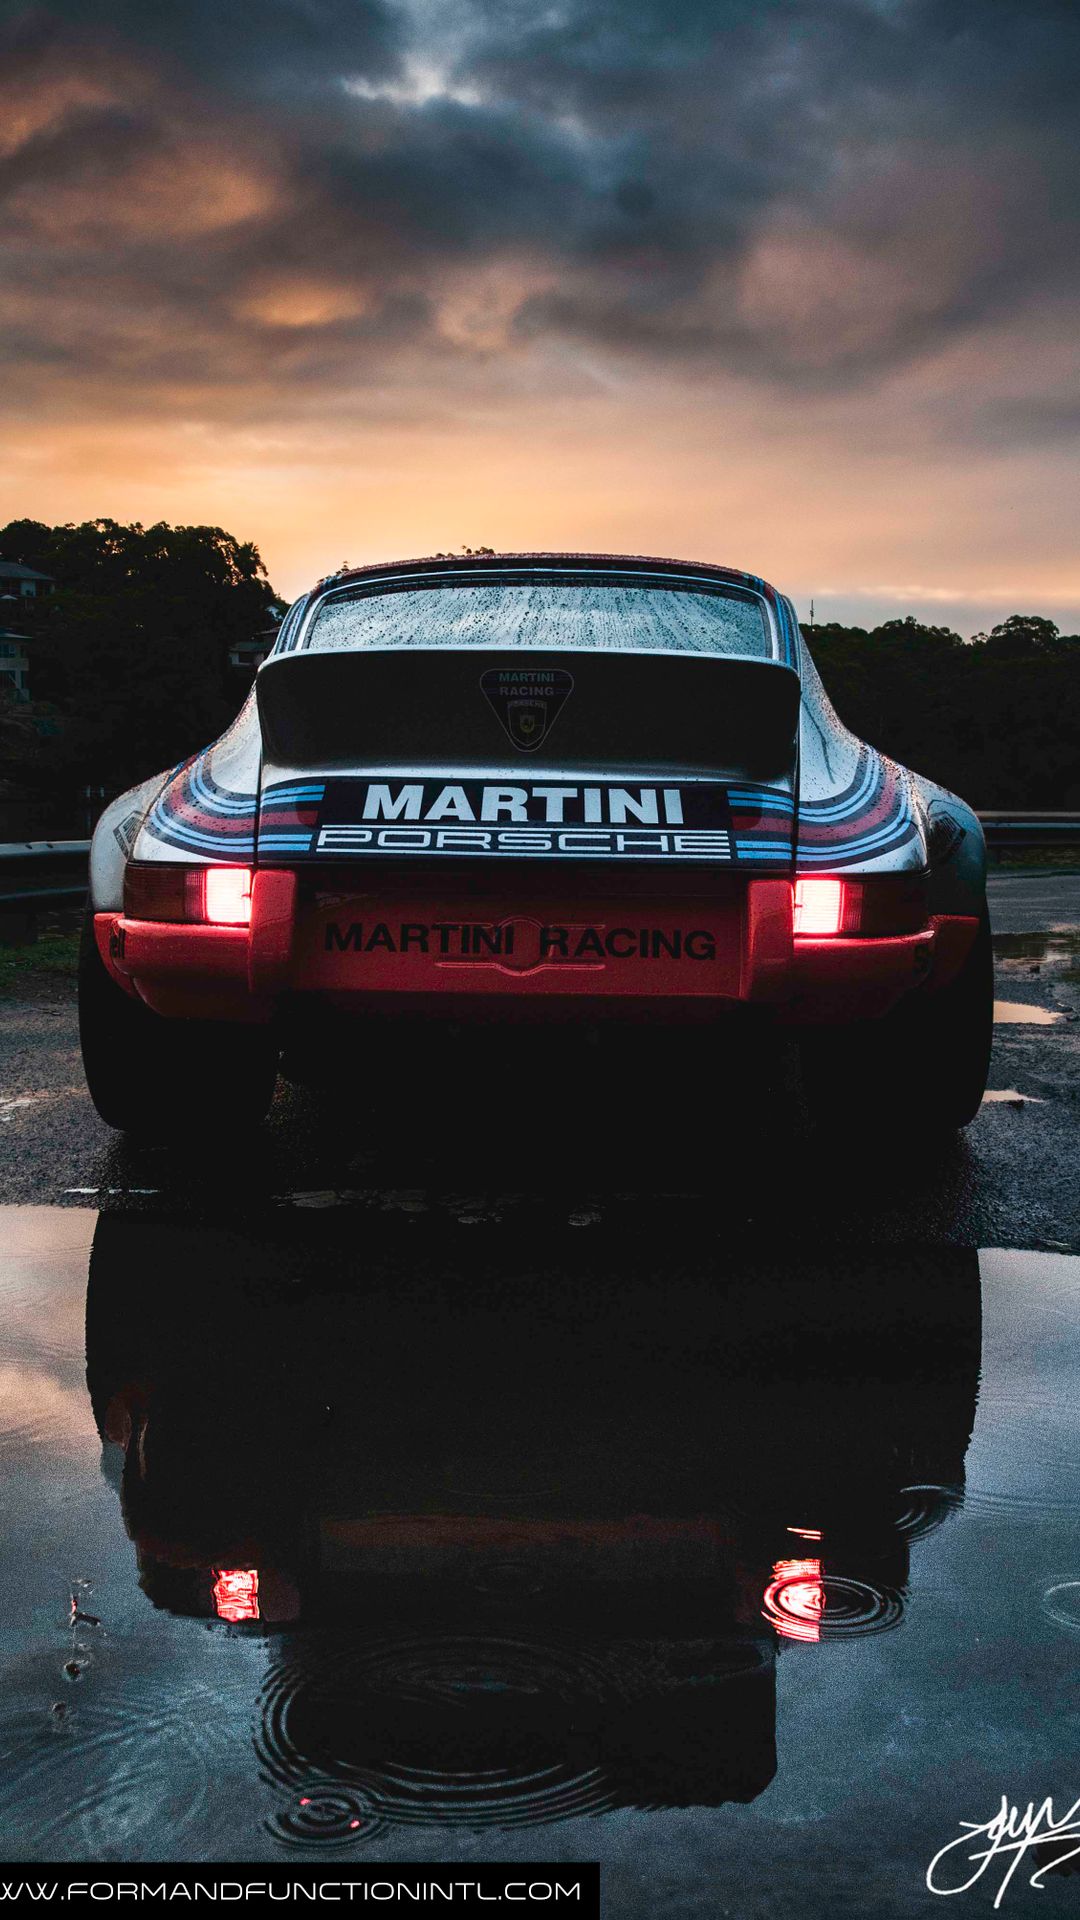 This Gorgeous Martini Racing Porsche 911 RSR Should Be Your New Desktop Wallpaper